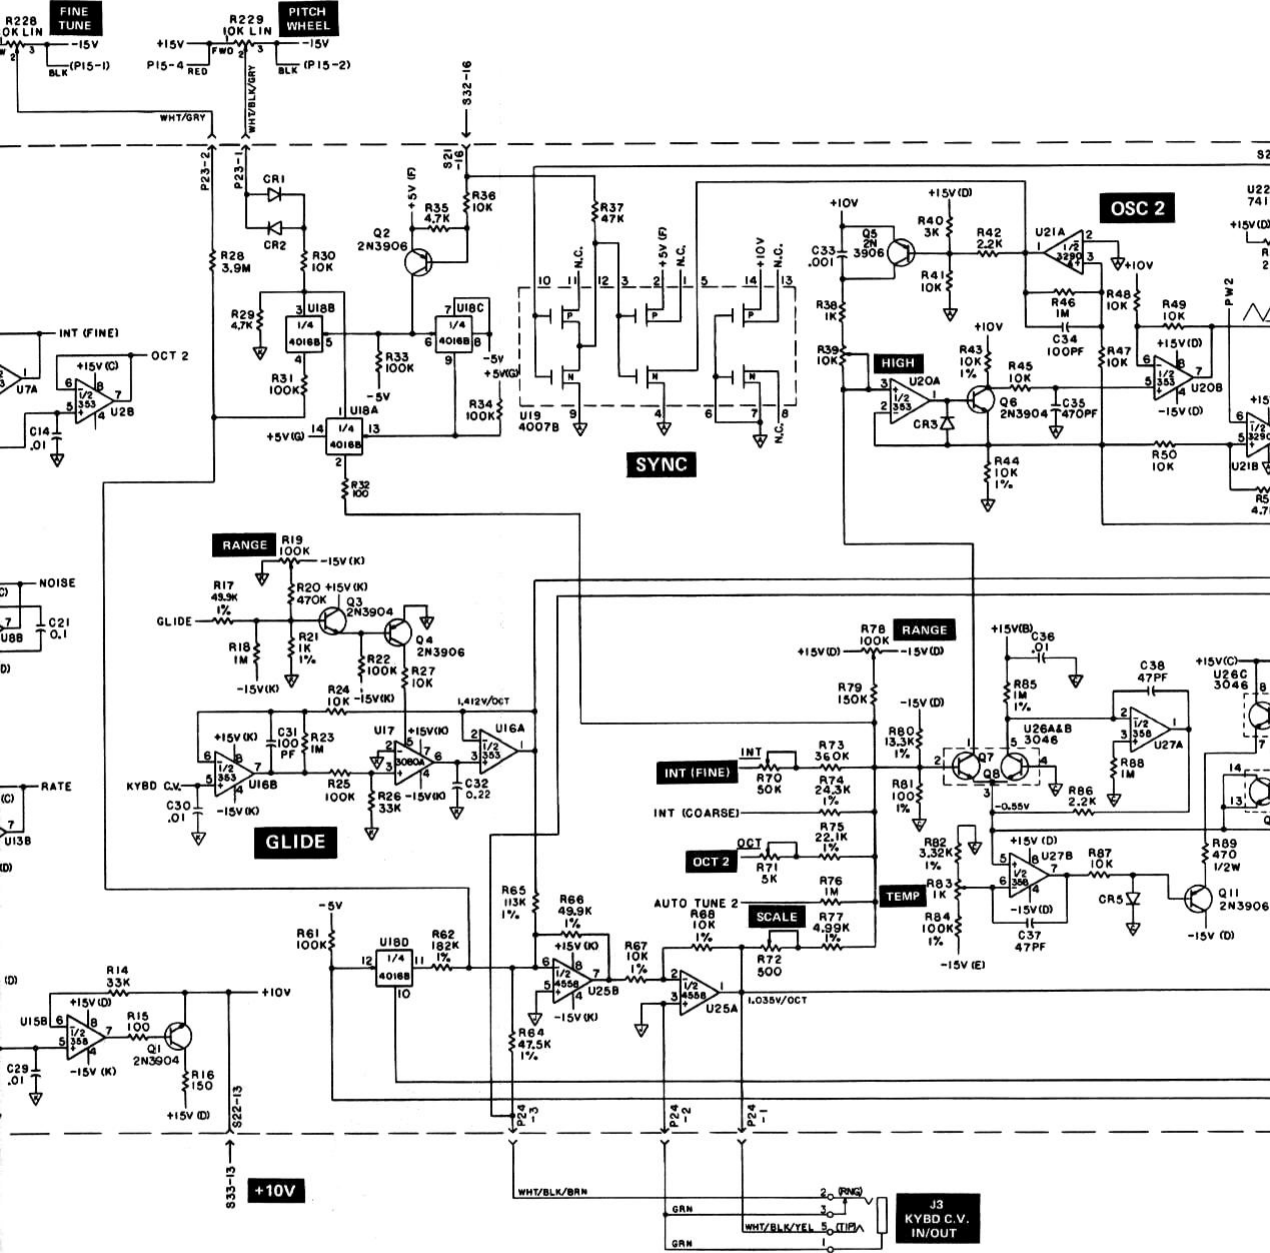 Page 2 of 11 - Moog Source Schematics